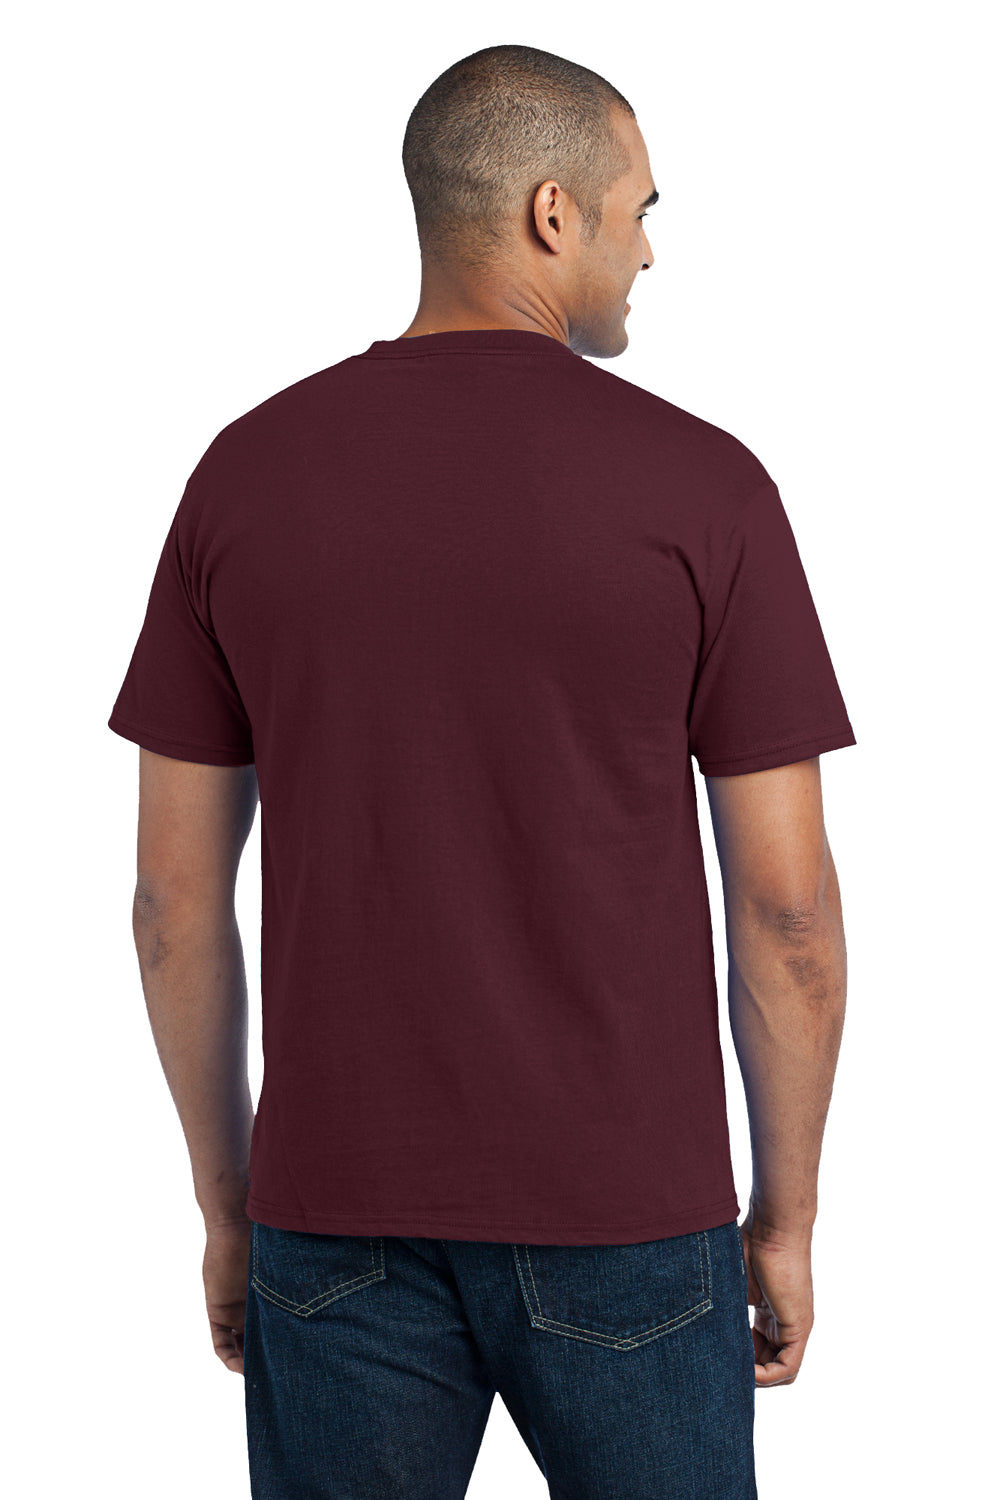 Port & Company PC55P Mens Core Short Sleeve Crewneck T-Shirt w/ Pocket Maroon Back